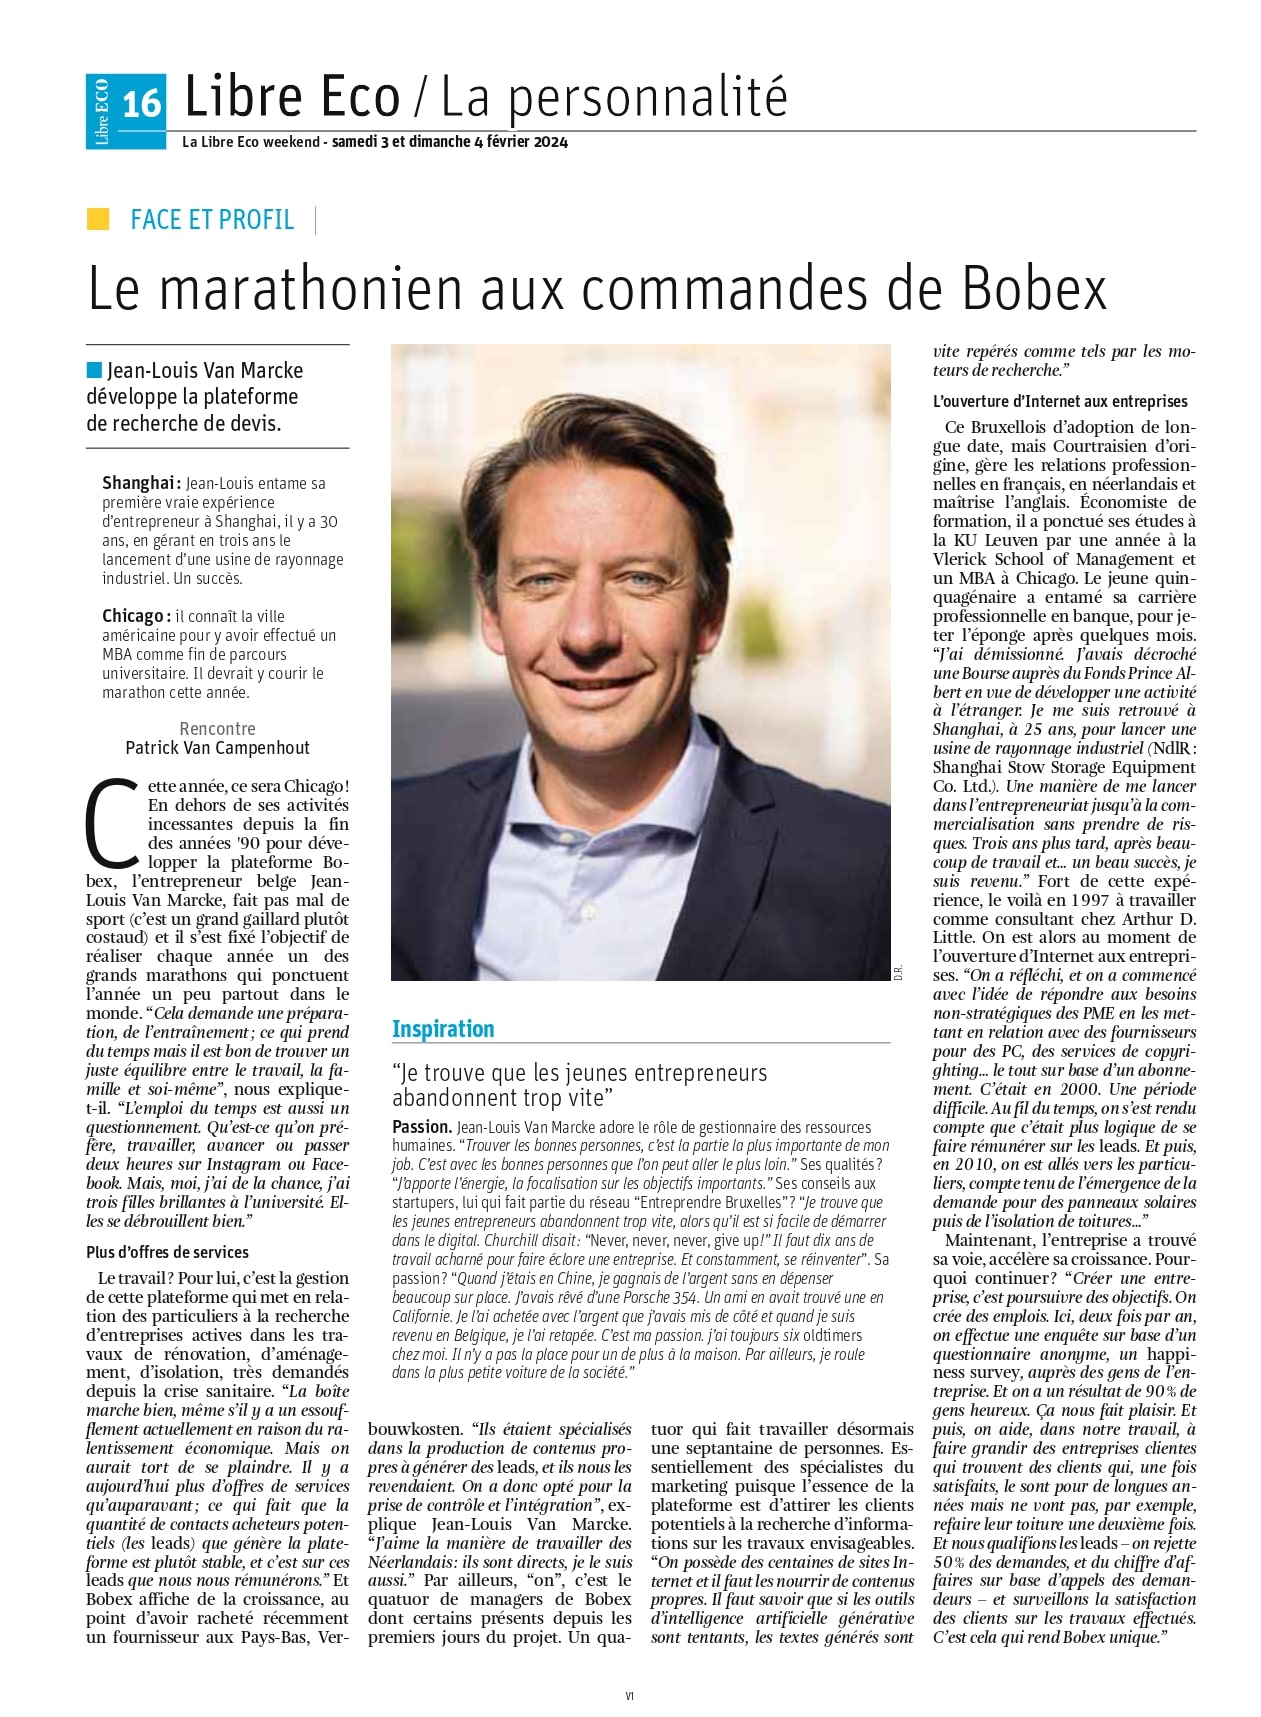 Jean-Louis_LaLibre_Bobex_marathonien.jpg